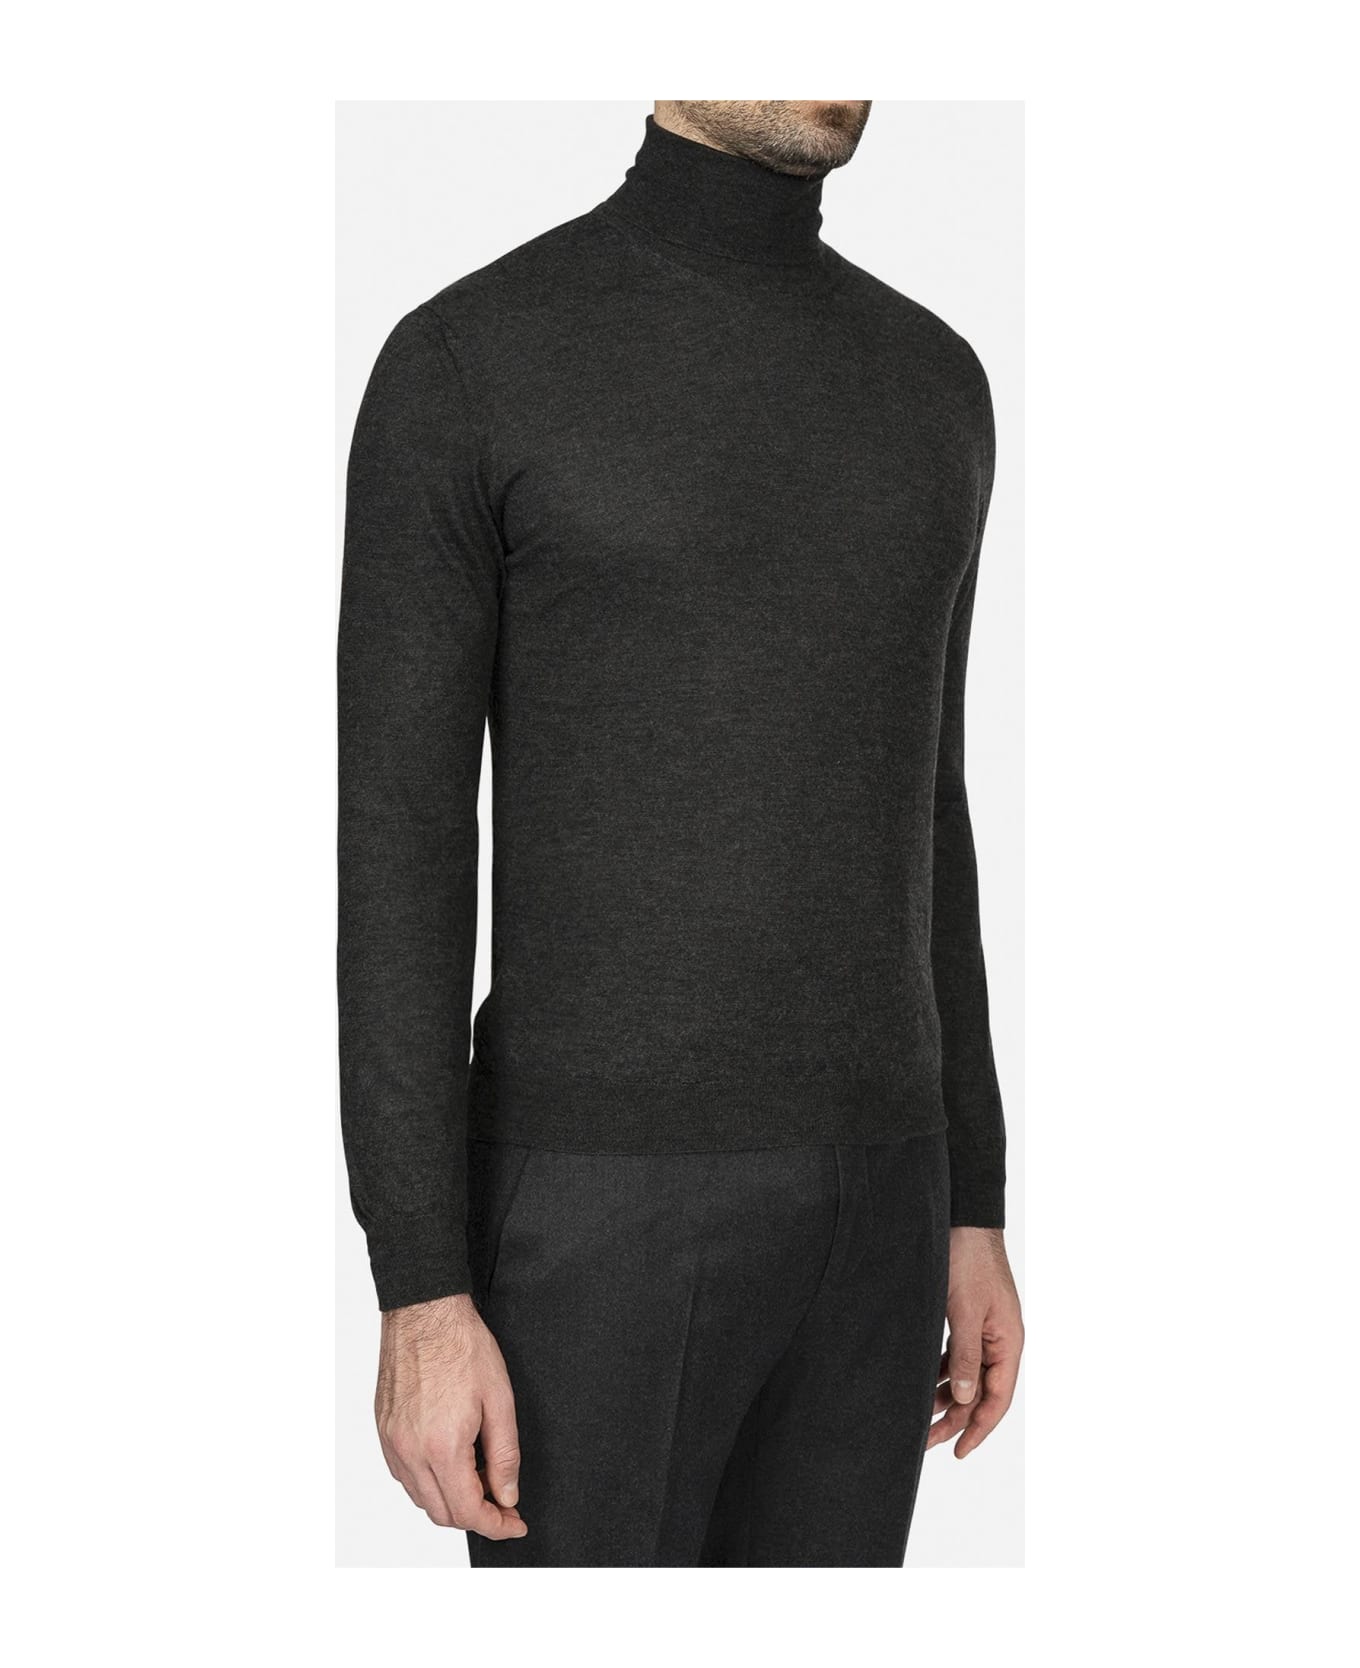 Larusmiani Turtleneck Sweater 'pullman' Sweater - DimGray